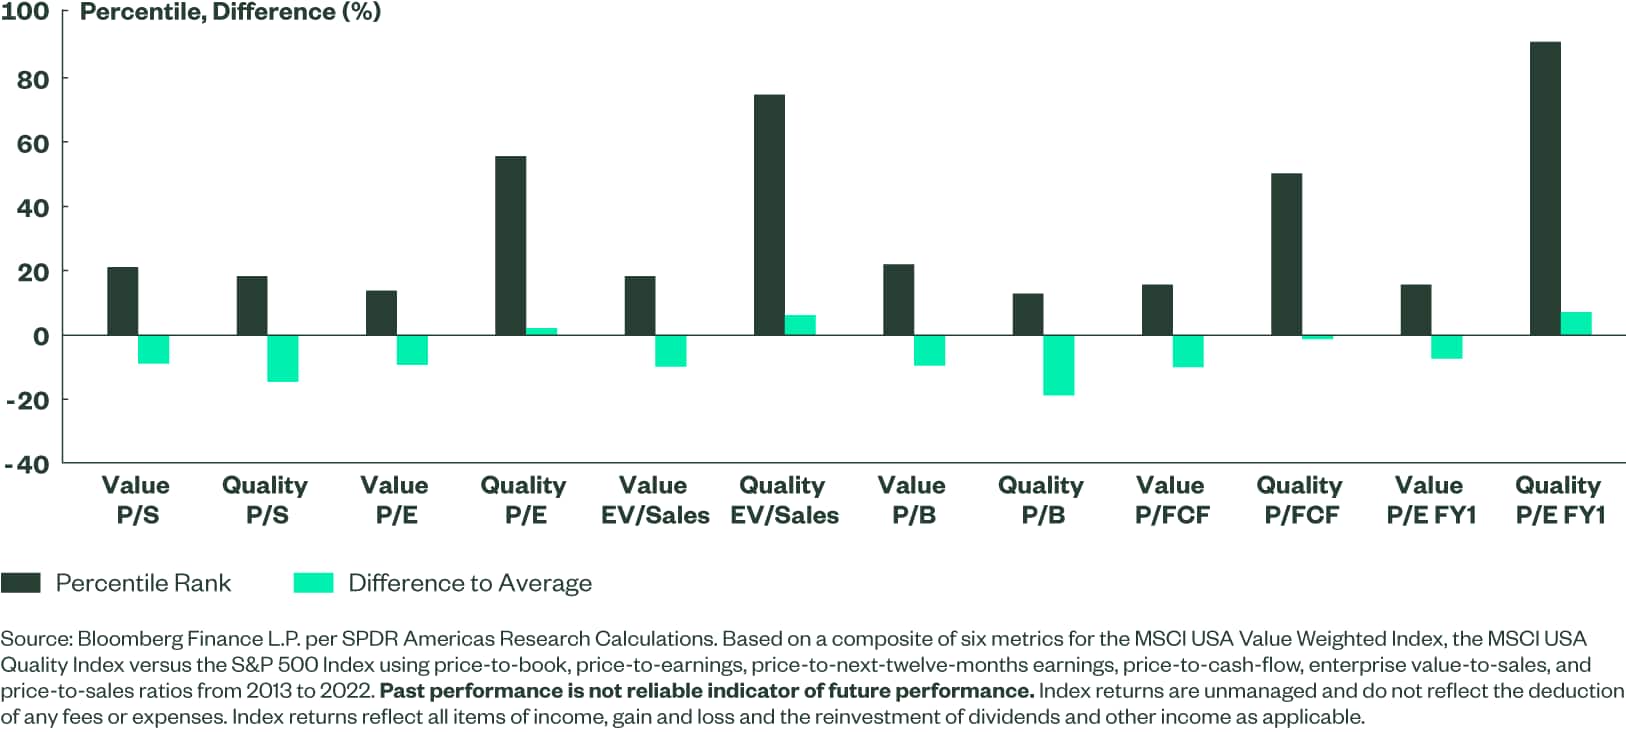 Relative Valuation Metrics versus Historical Levels